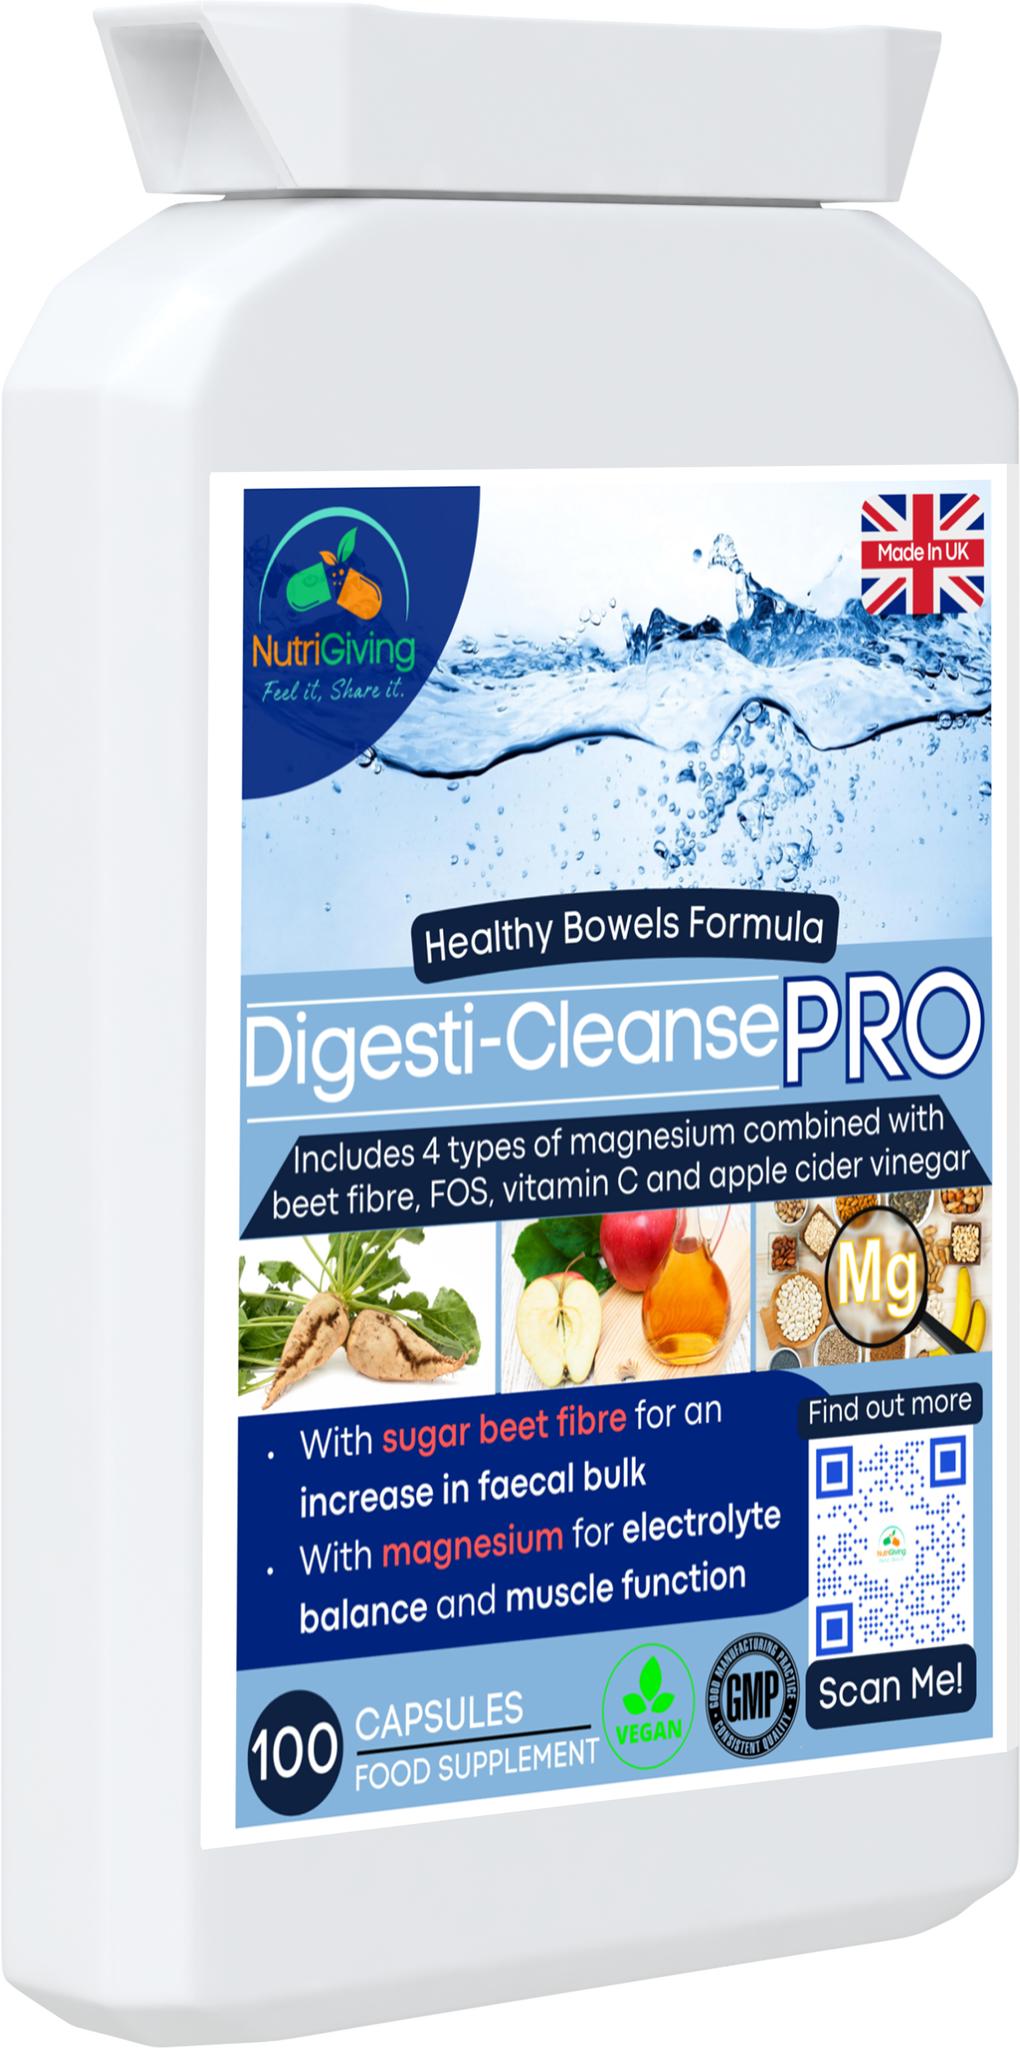 Digesti-Cleanse Pro